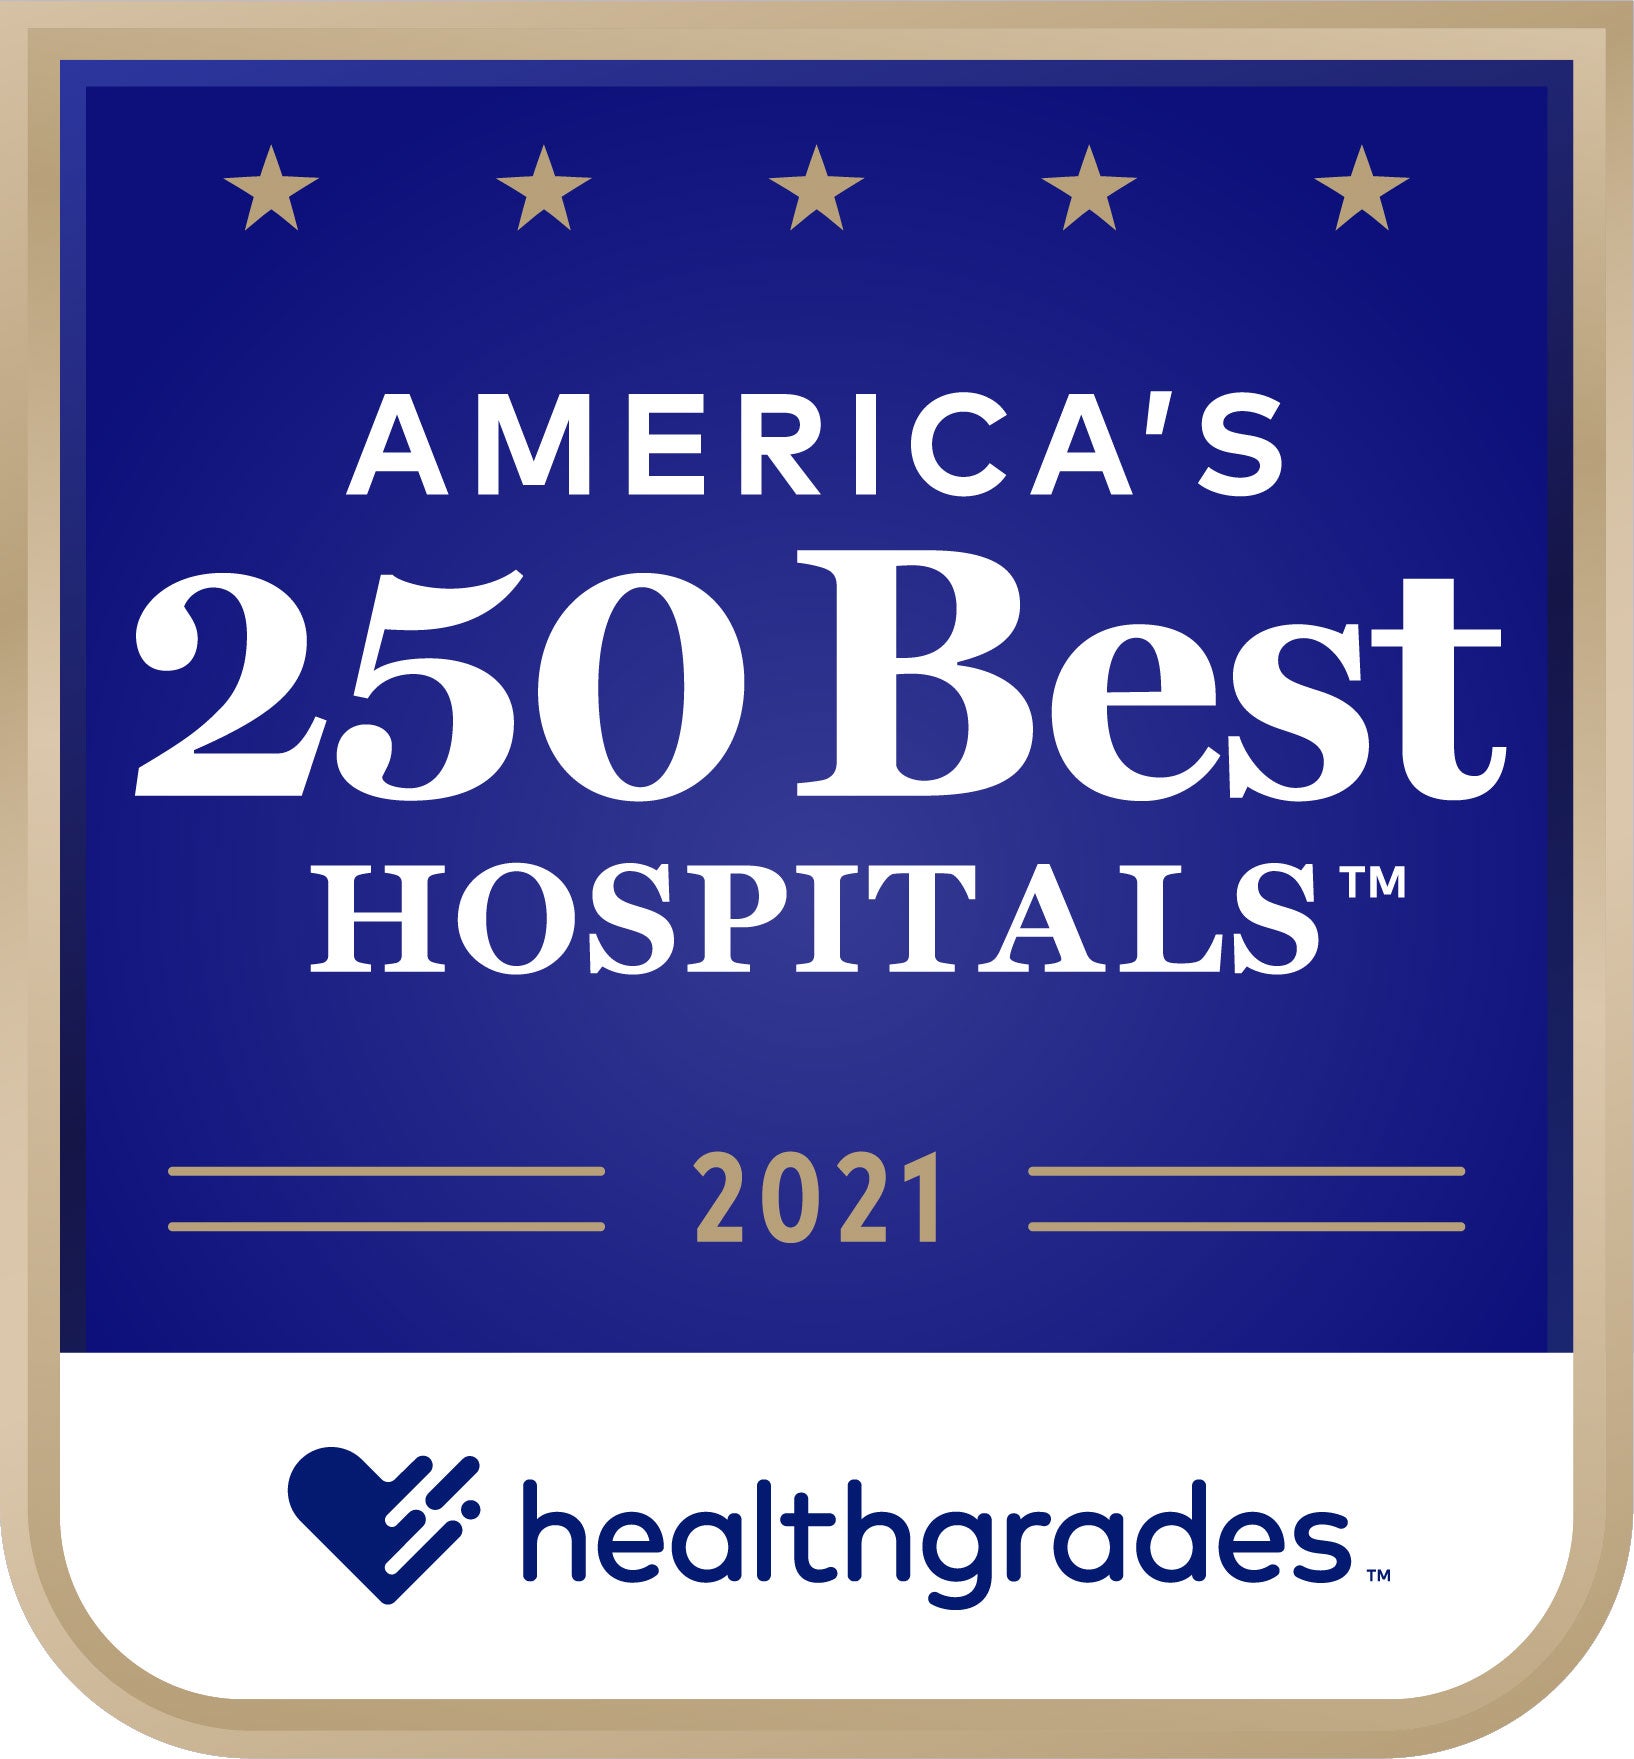 Healthgrades 2021 America’s 250 Best Hospitals